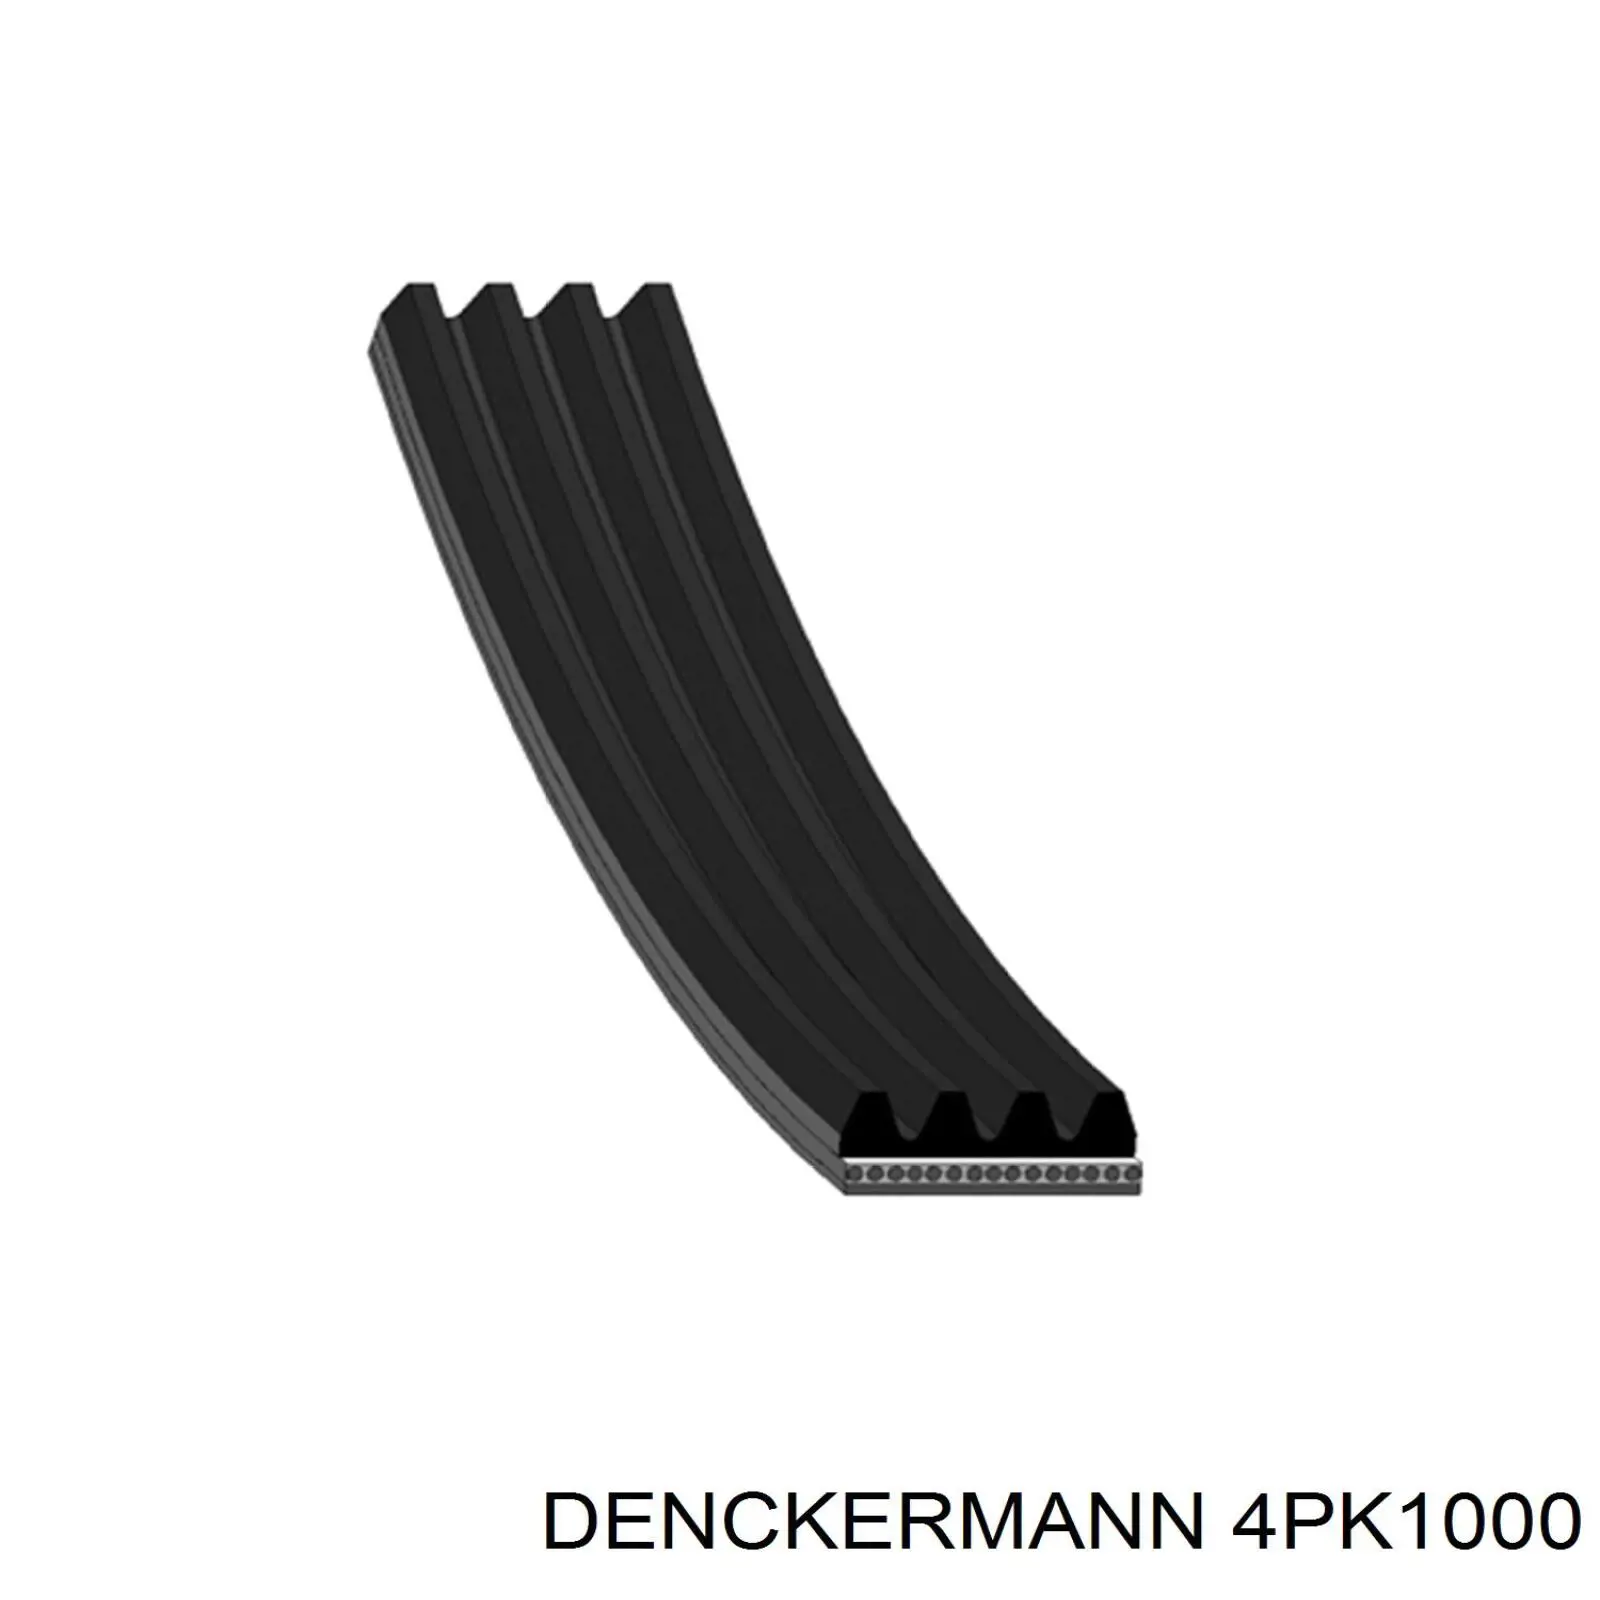 4PK1000 Denckermann correa trapezoidal